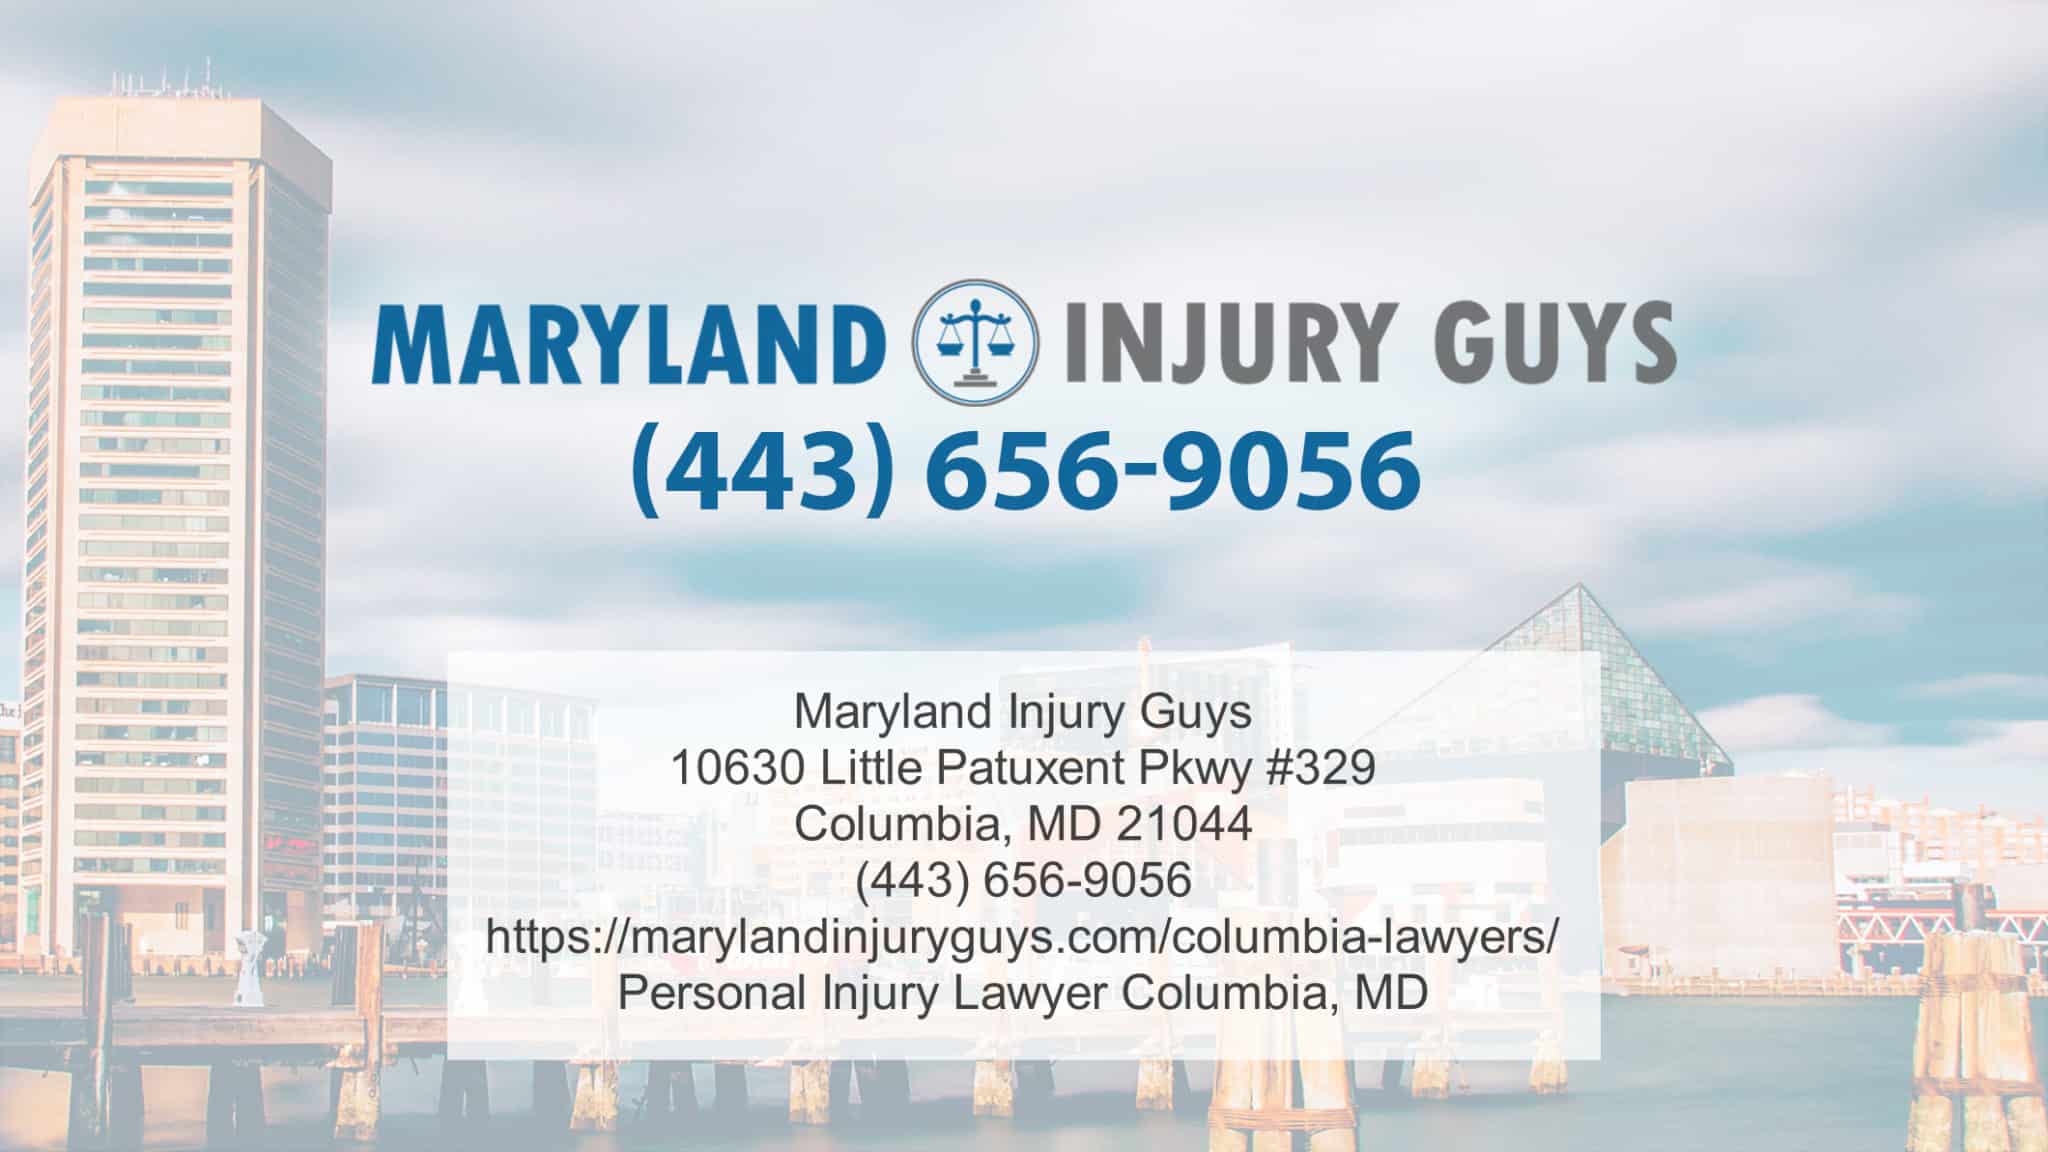 Columbia-Maryland-Injury-Guys-address-image.jpg